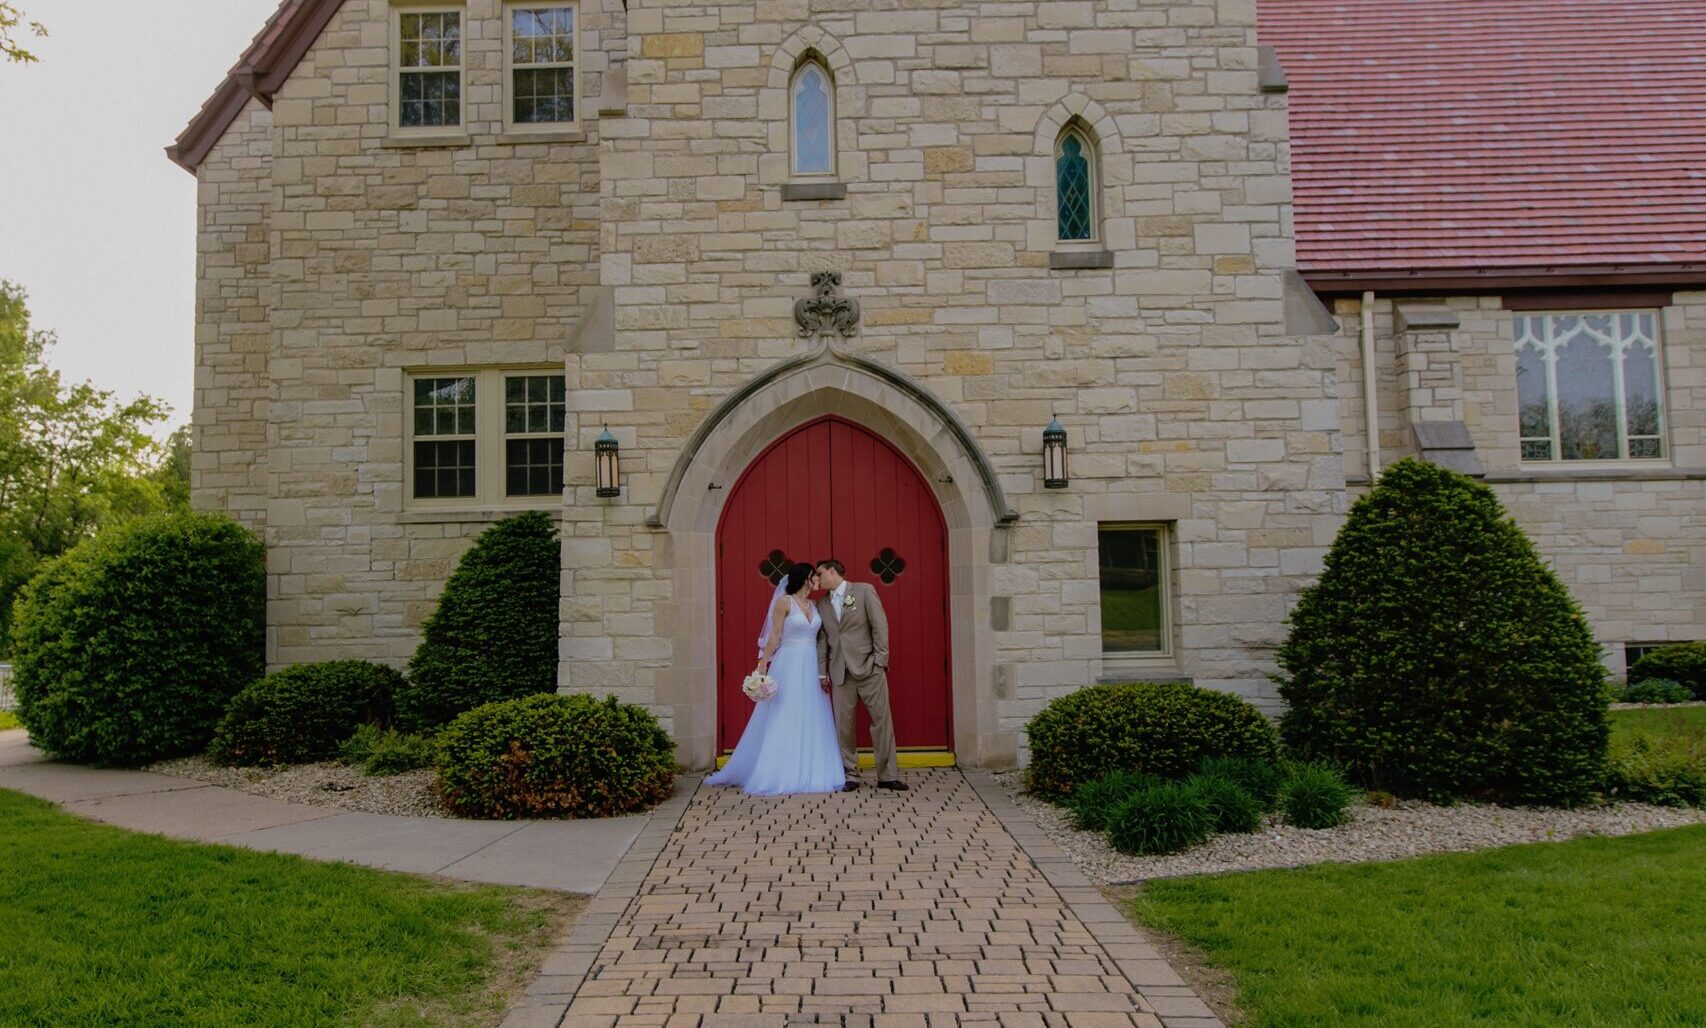 church exterior with wedding couple